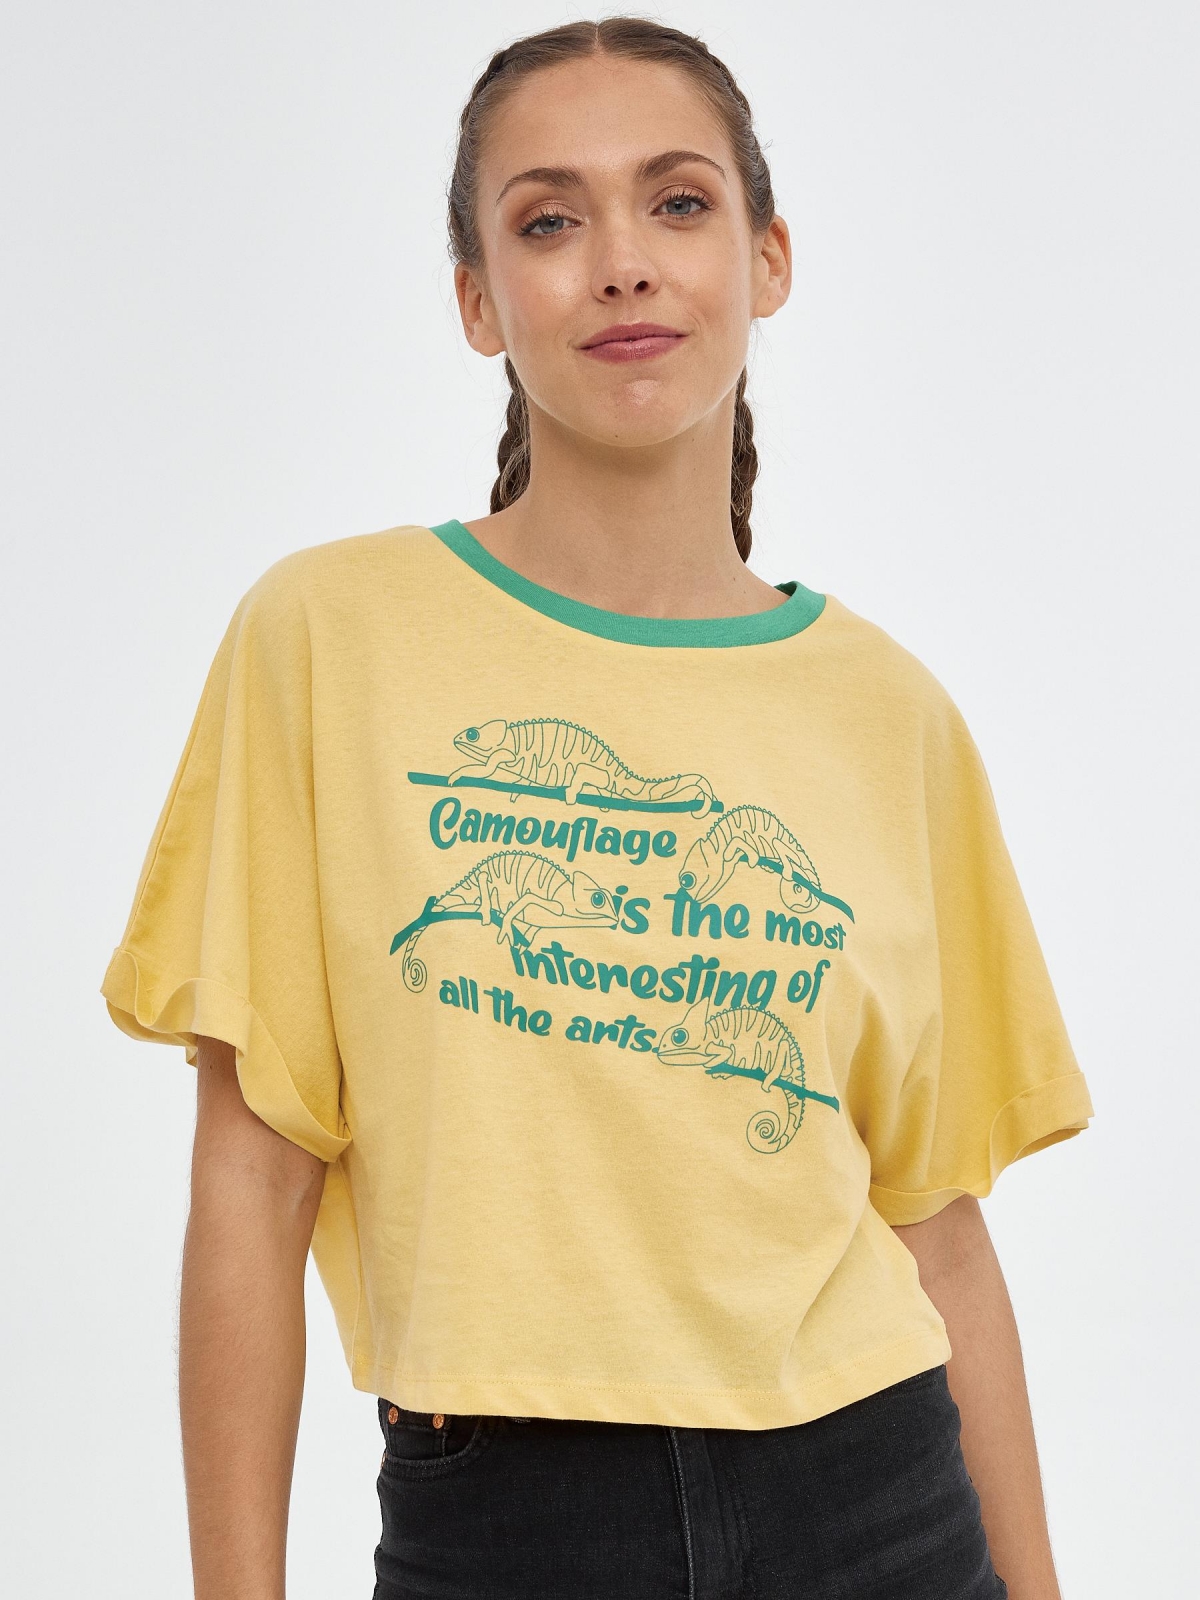 T-shirt crop camaleão amarelo pastel vista meia frontal